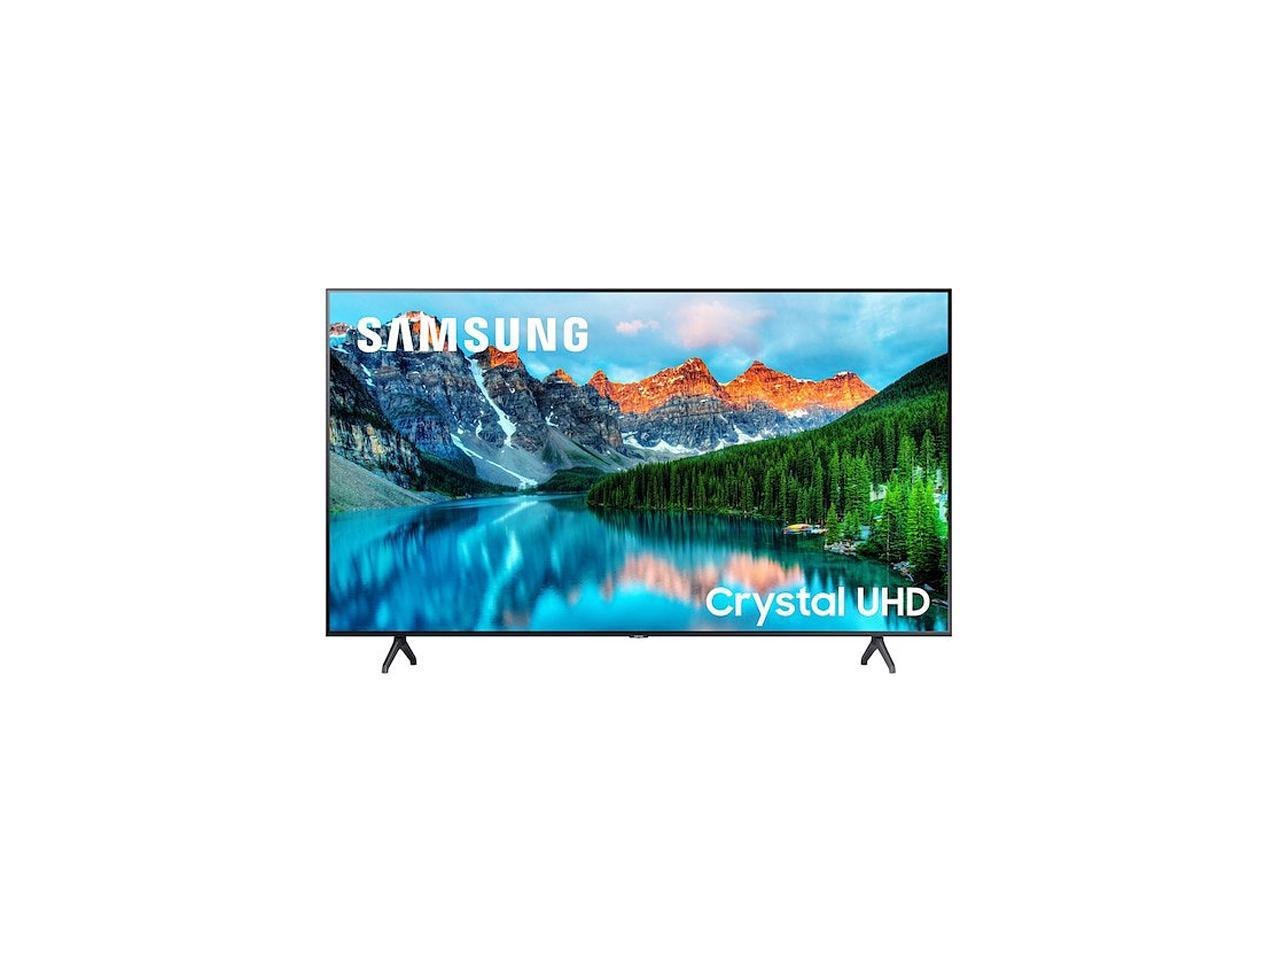 Samsung Be43t-H - Bet-H Series 43" Crystal Uhd 4K Pro TV